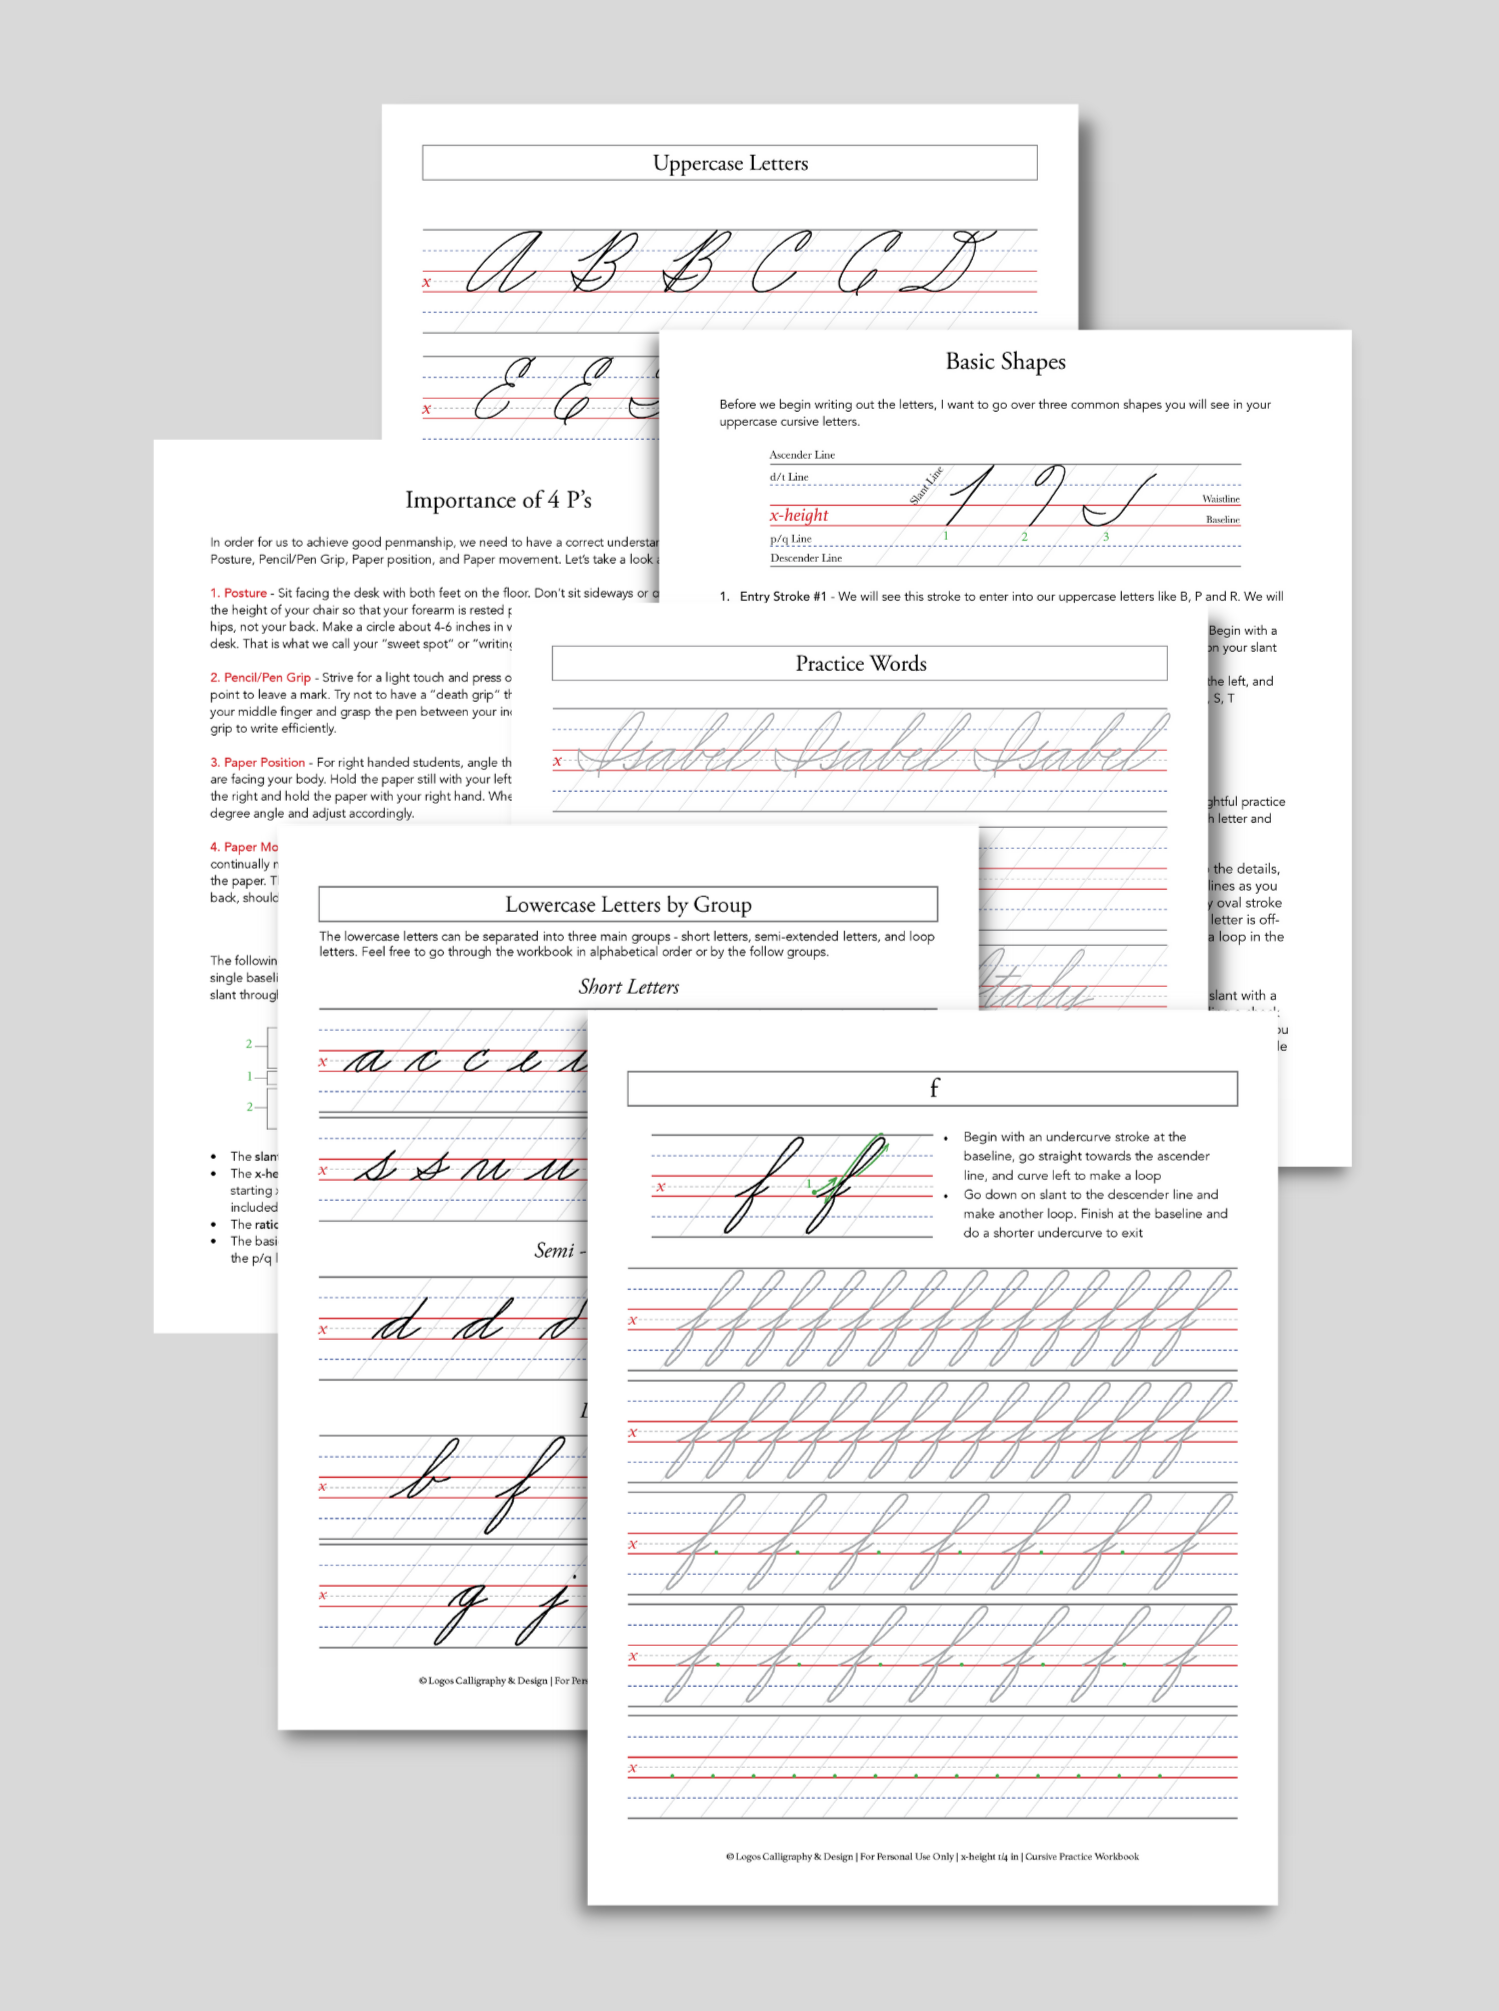 Calligraphy Handwriting Paper For Beginner Practice: Calligraphy Writing  Paper And Workbook, 100 Sheet Pages Writing Practice, Lettering Practice  Pad (Paperback)